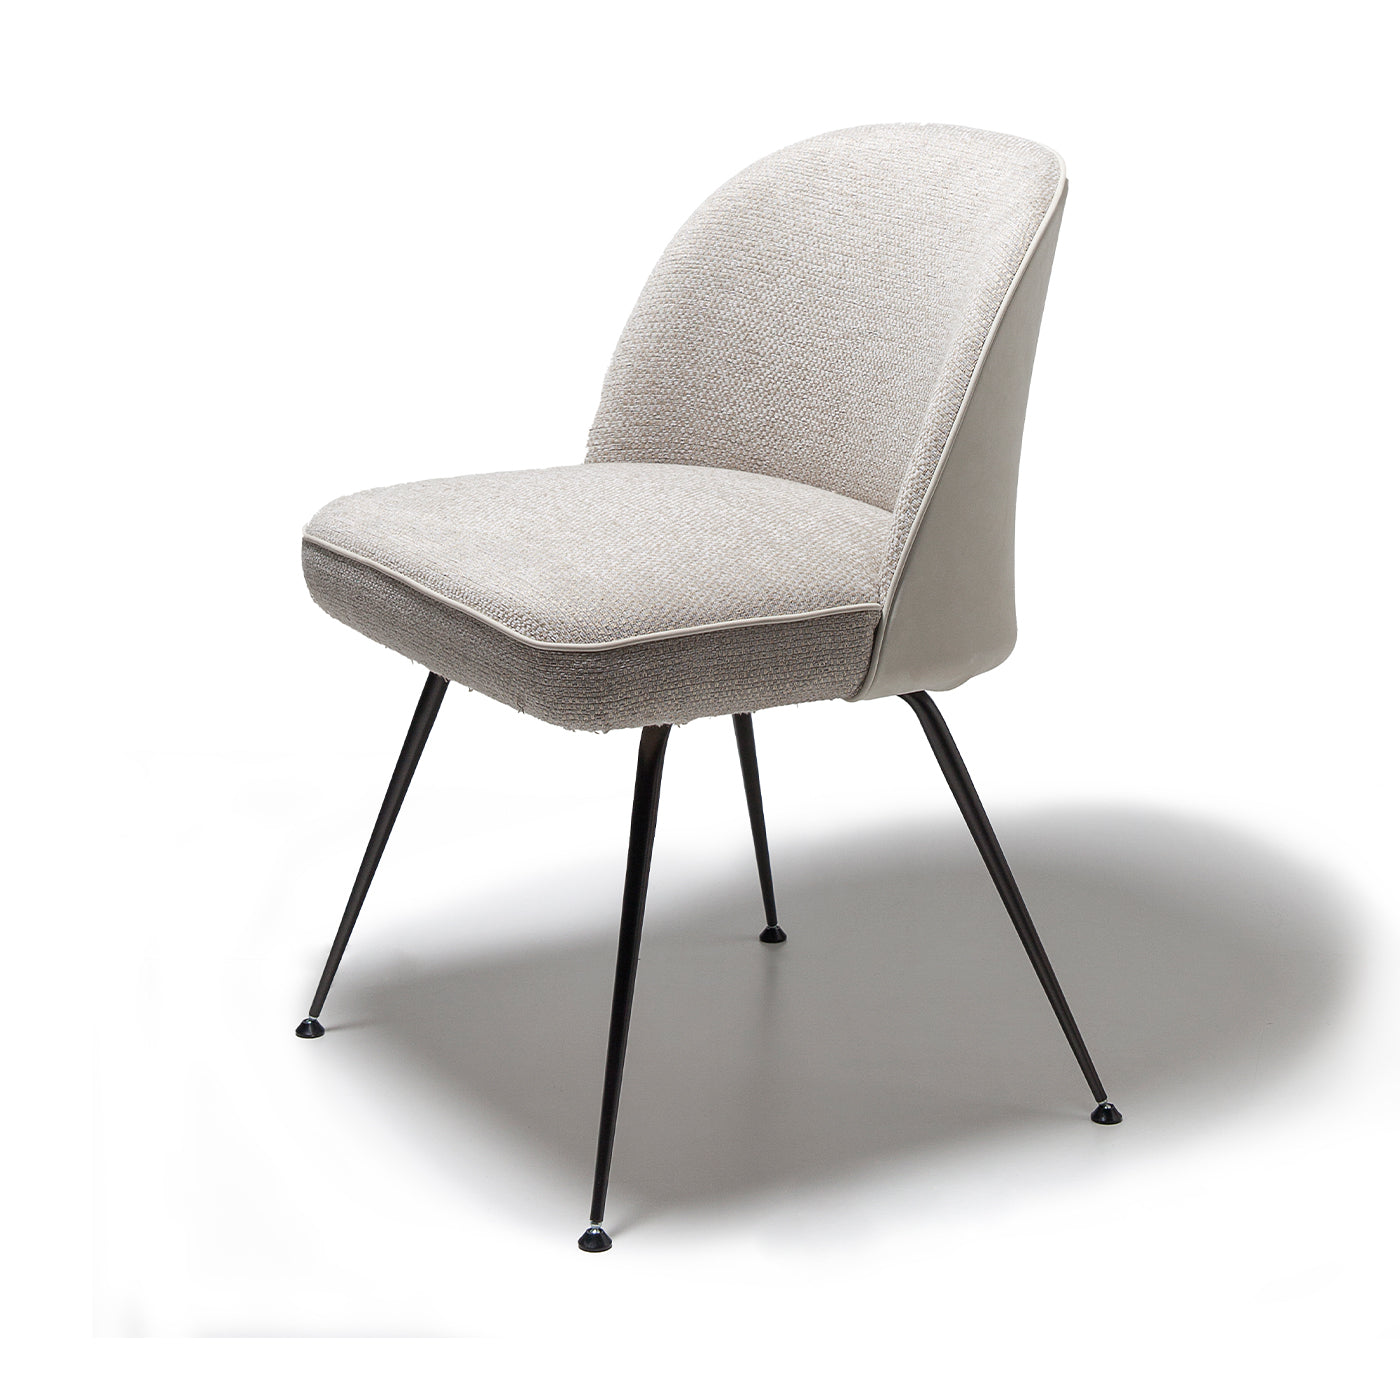 Like 1400 Gray Chair by Gianluigi Landoni - Alternative view 1